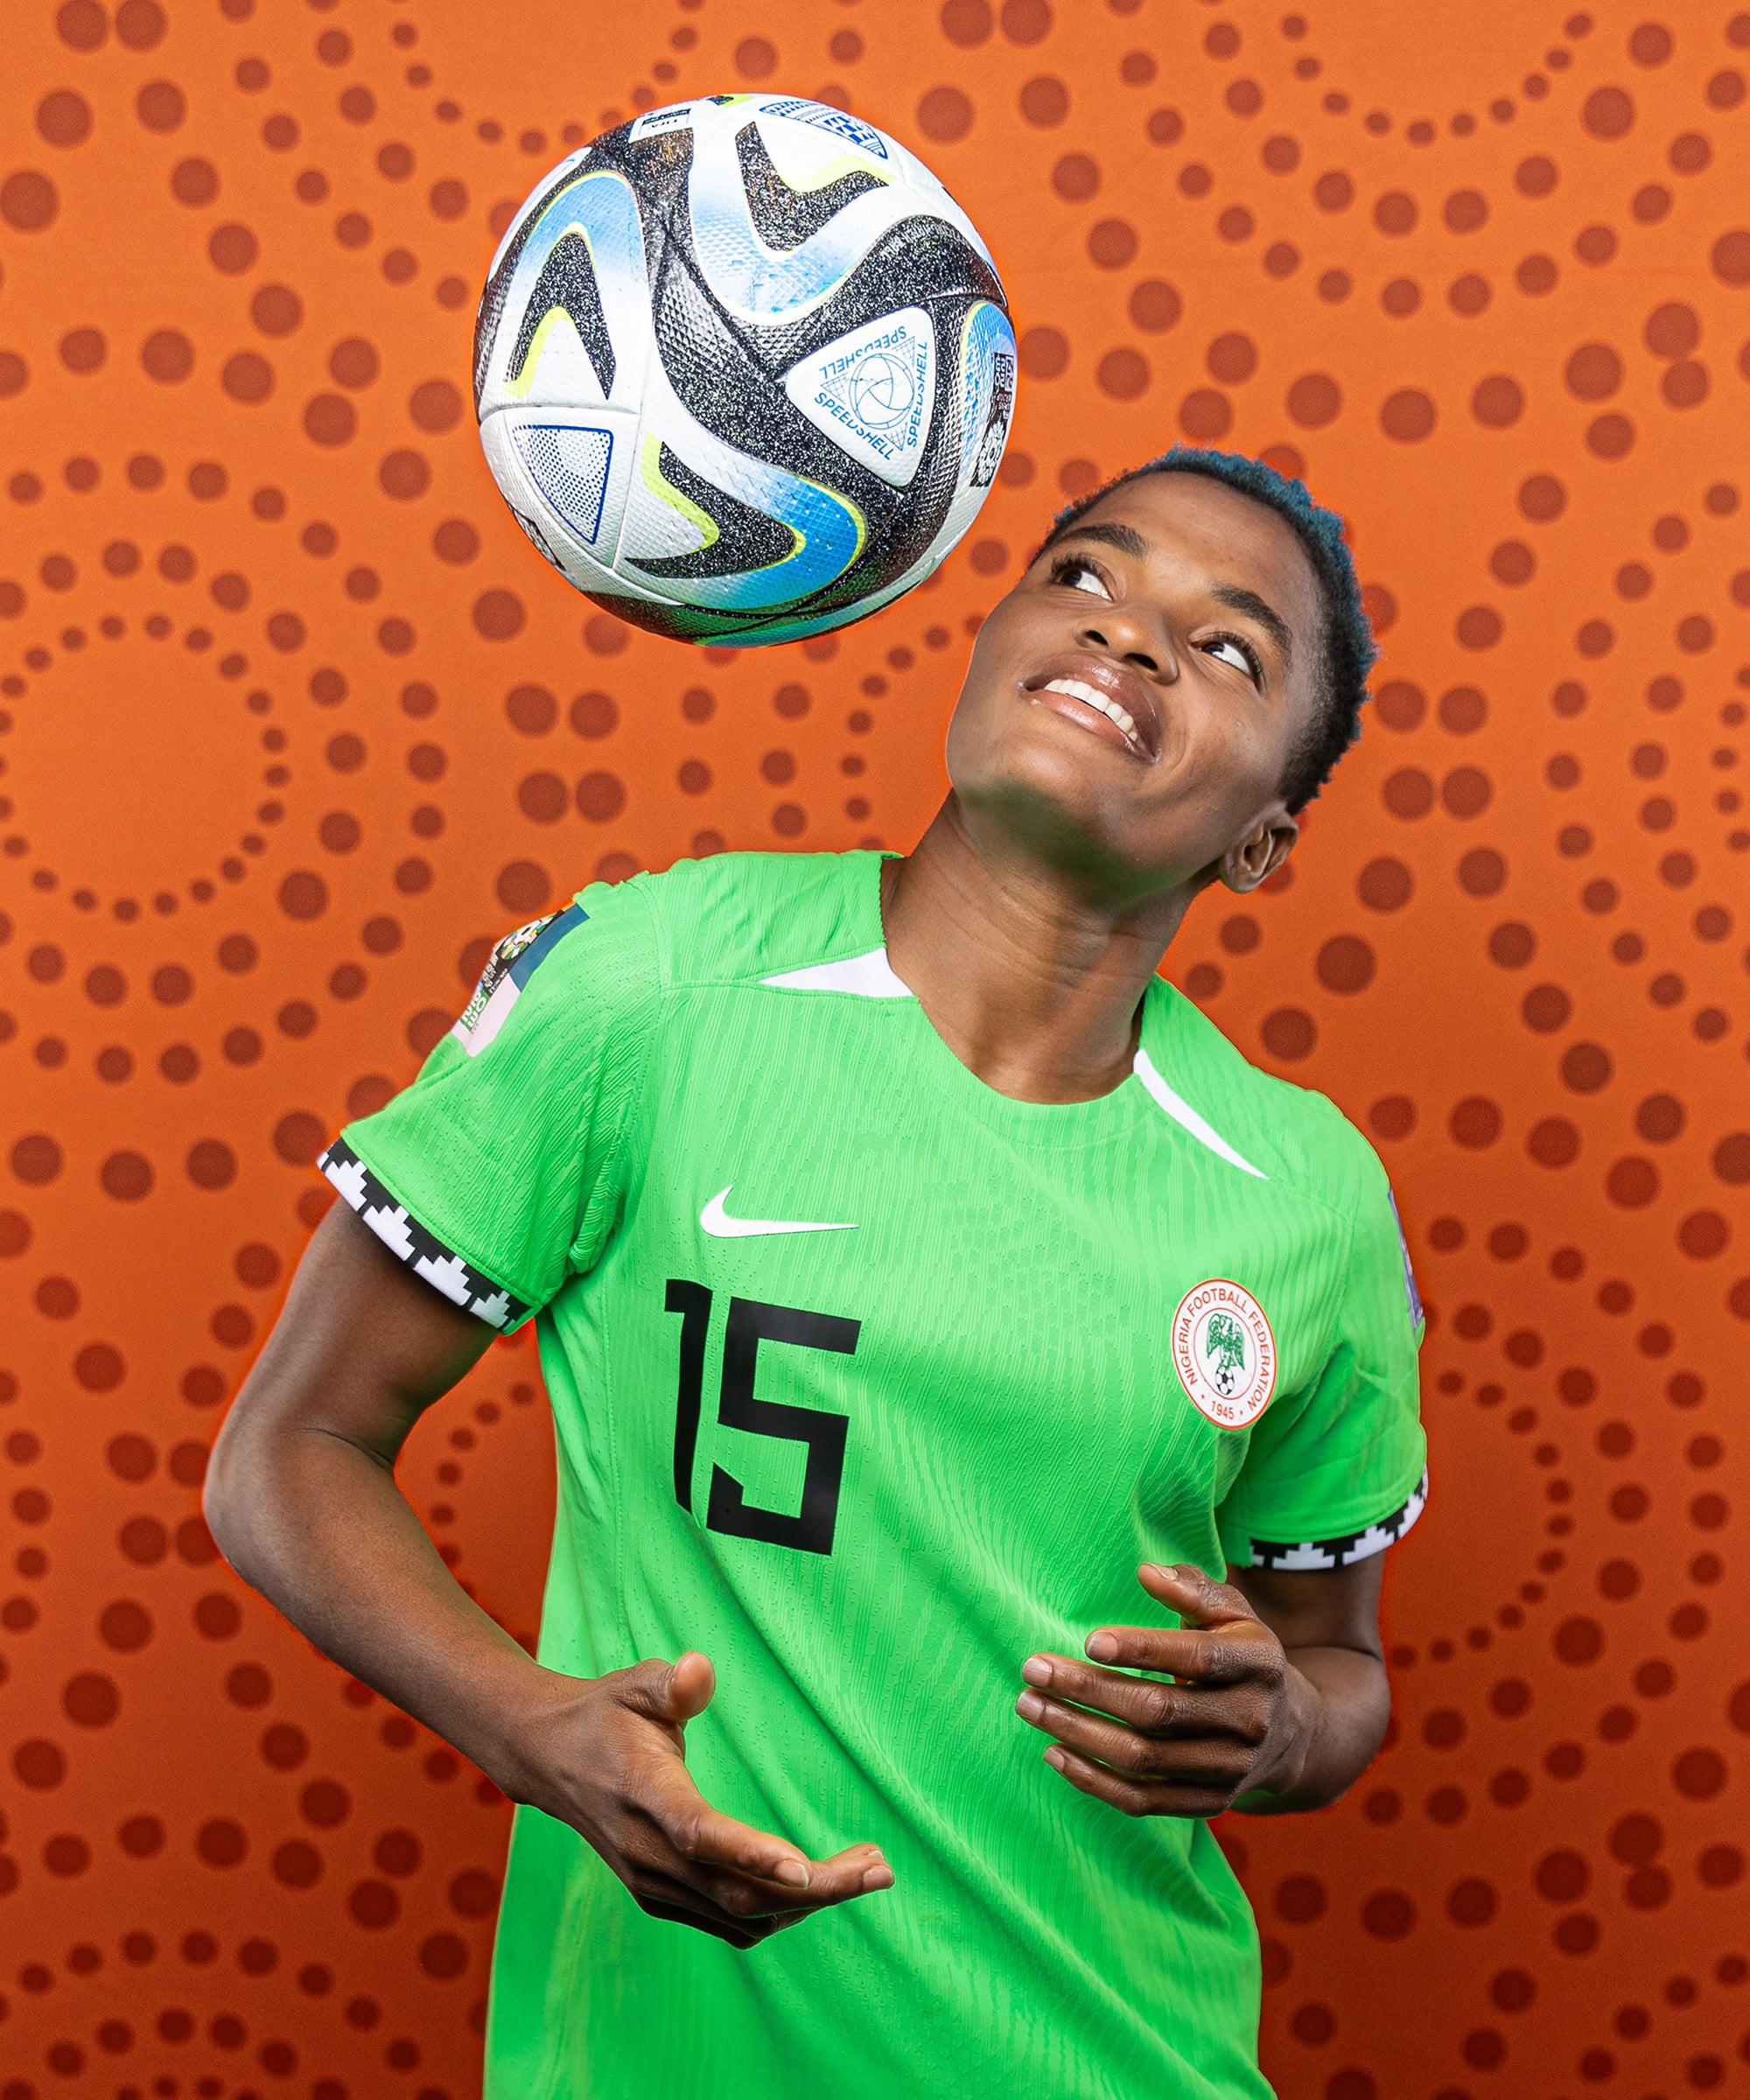 Fifa 2023 Finally Cracked! - Gaming - Nigeria